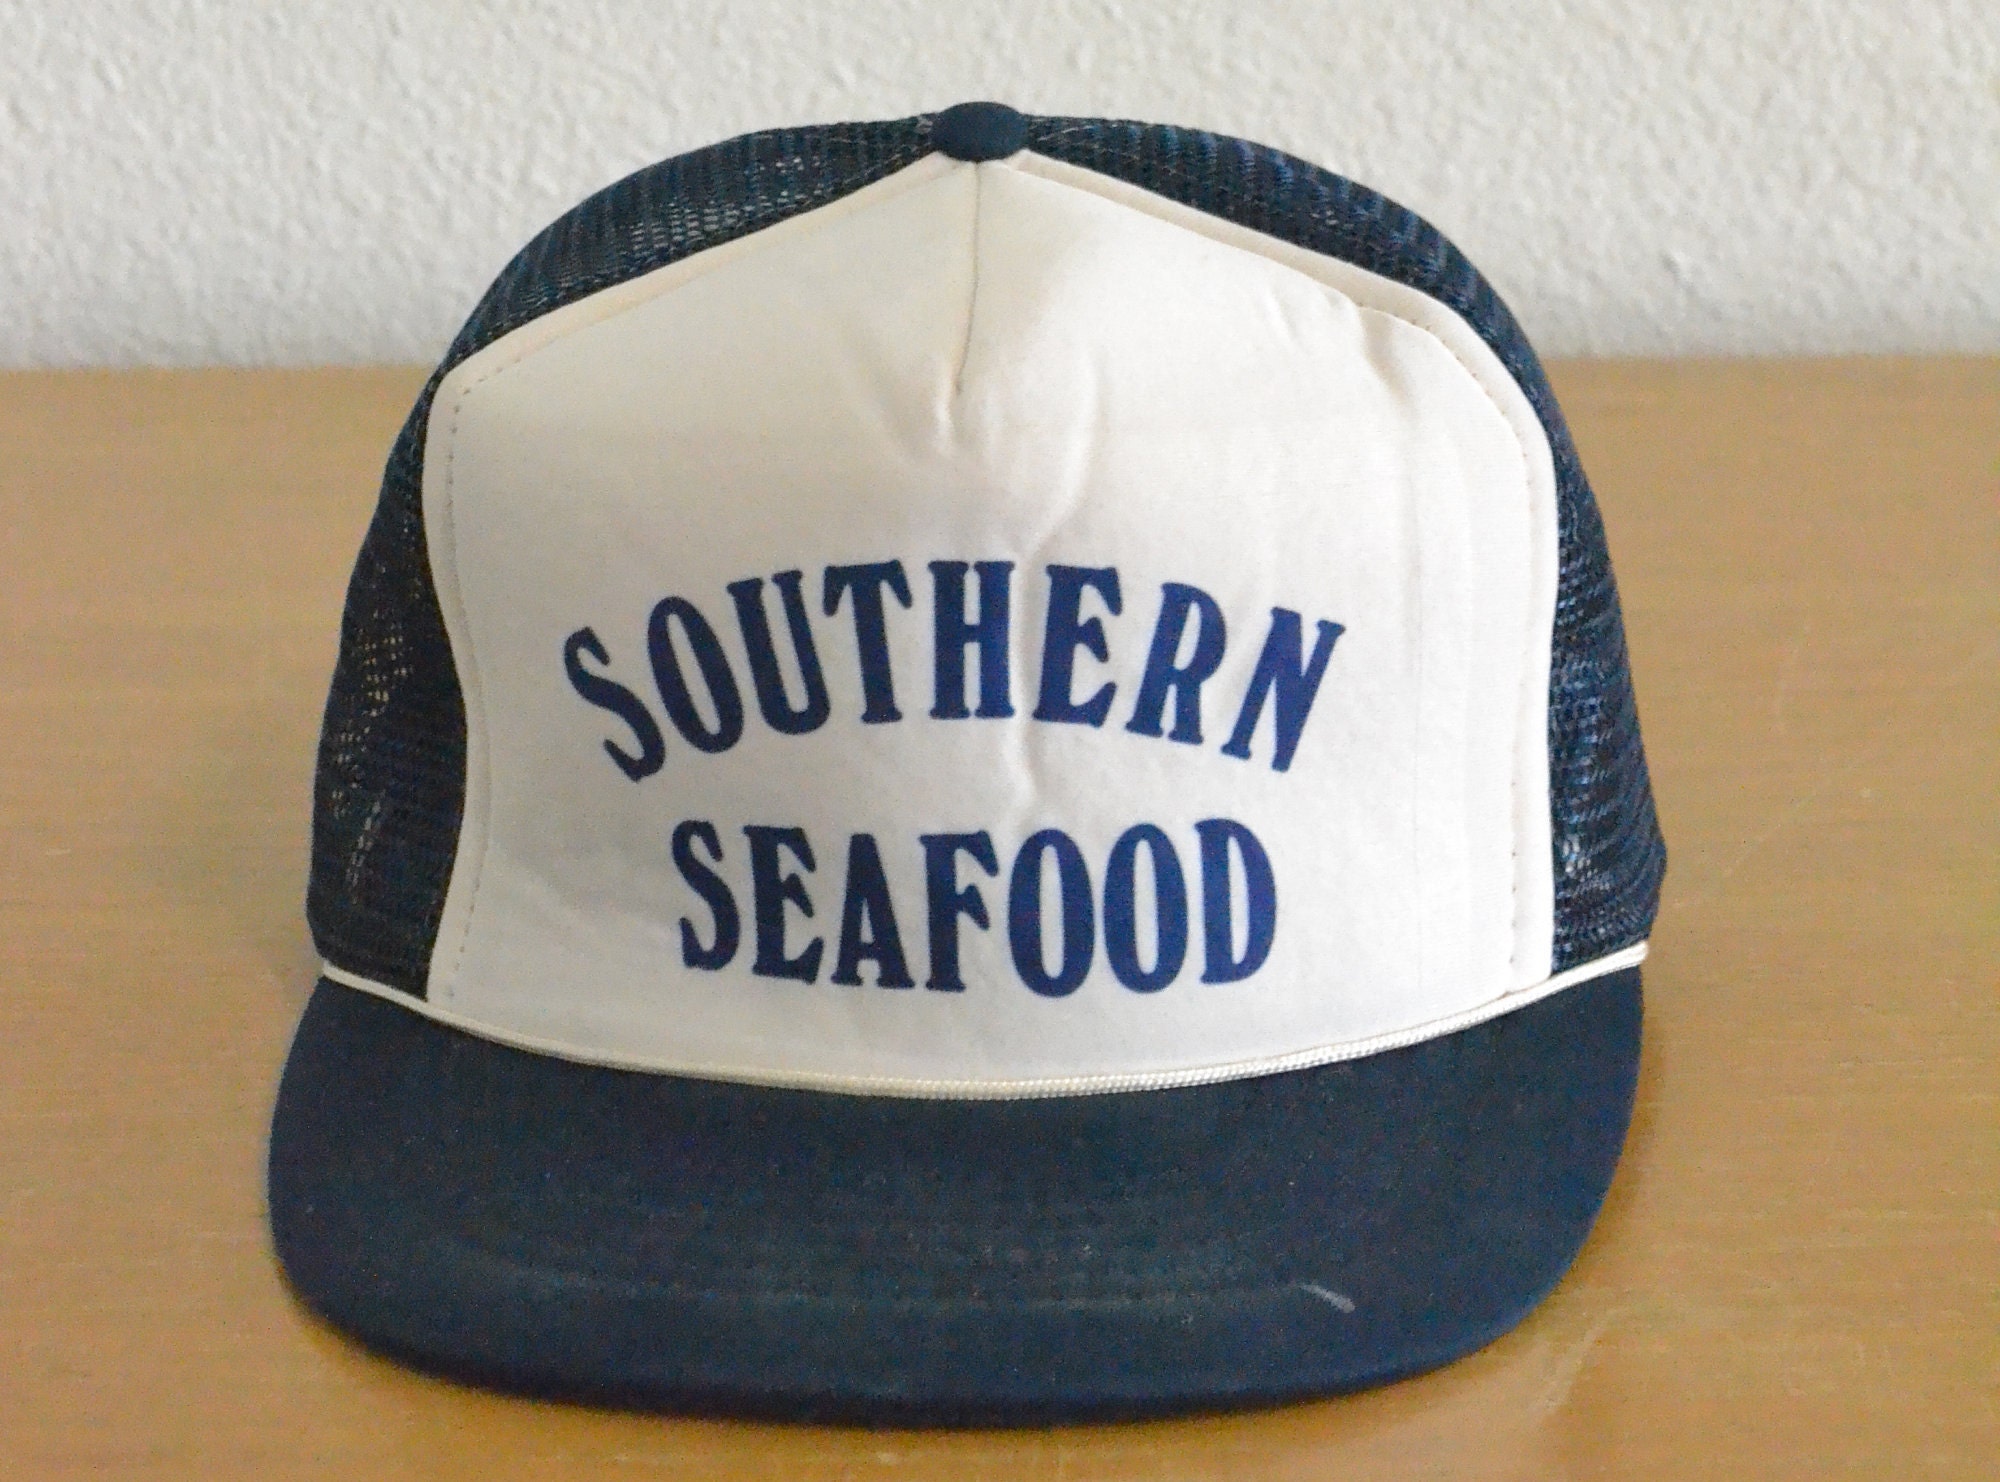 Vintage Southern Seafood Trucker Hat